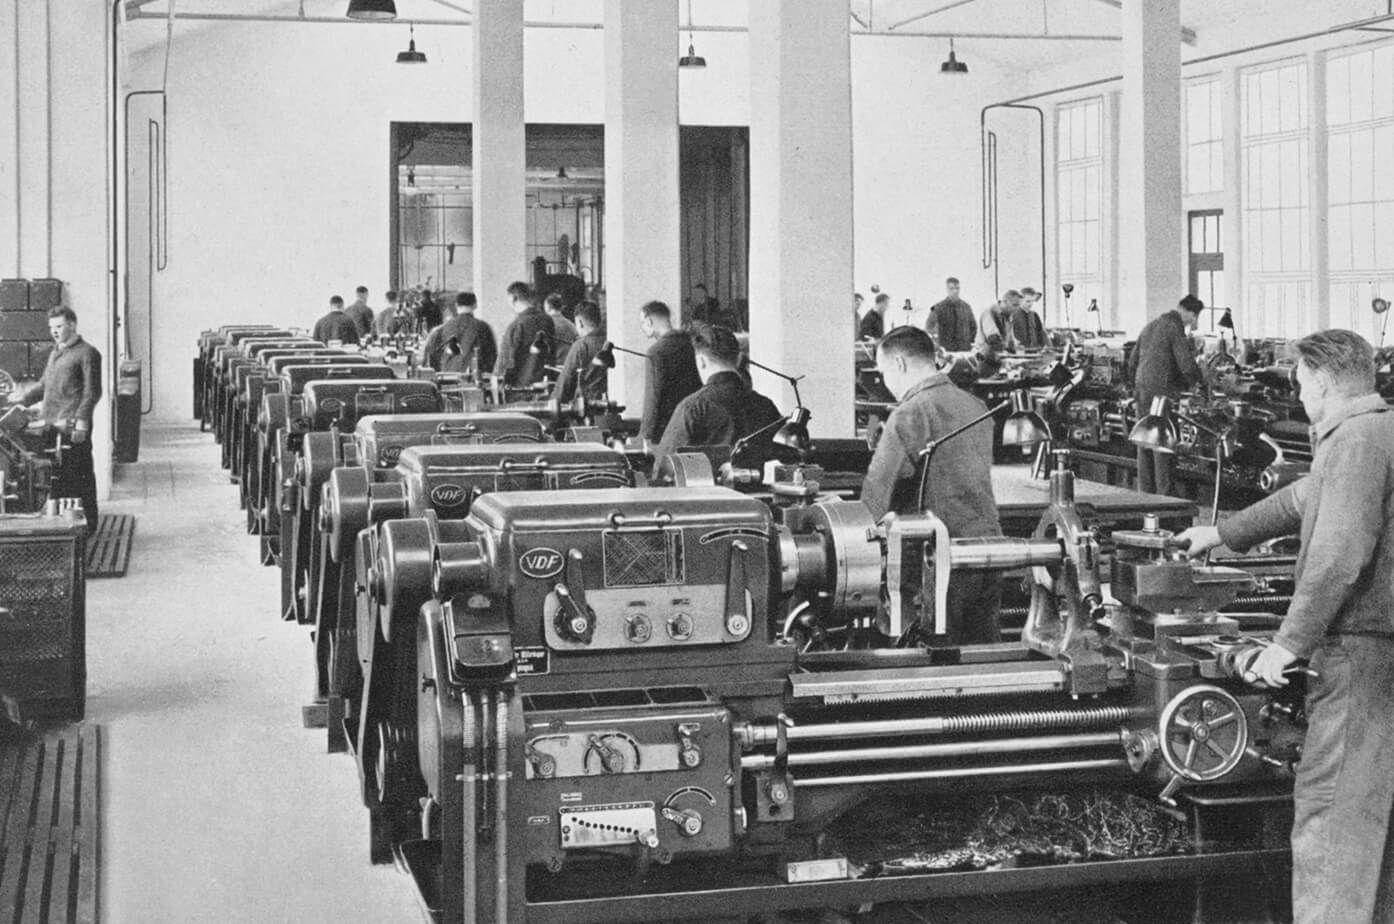 1935: Mechanical processing of crankshafts